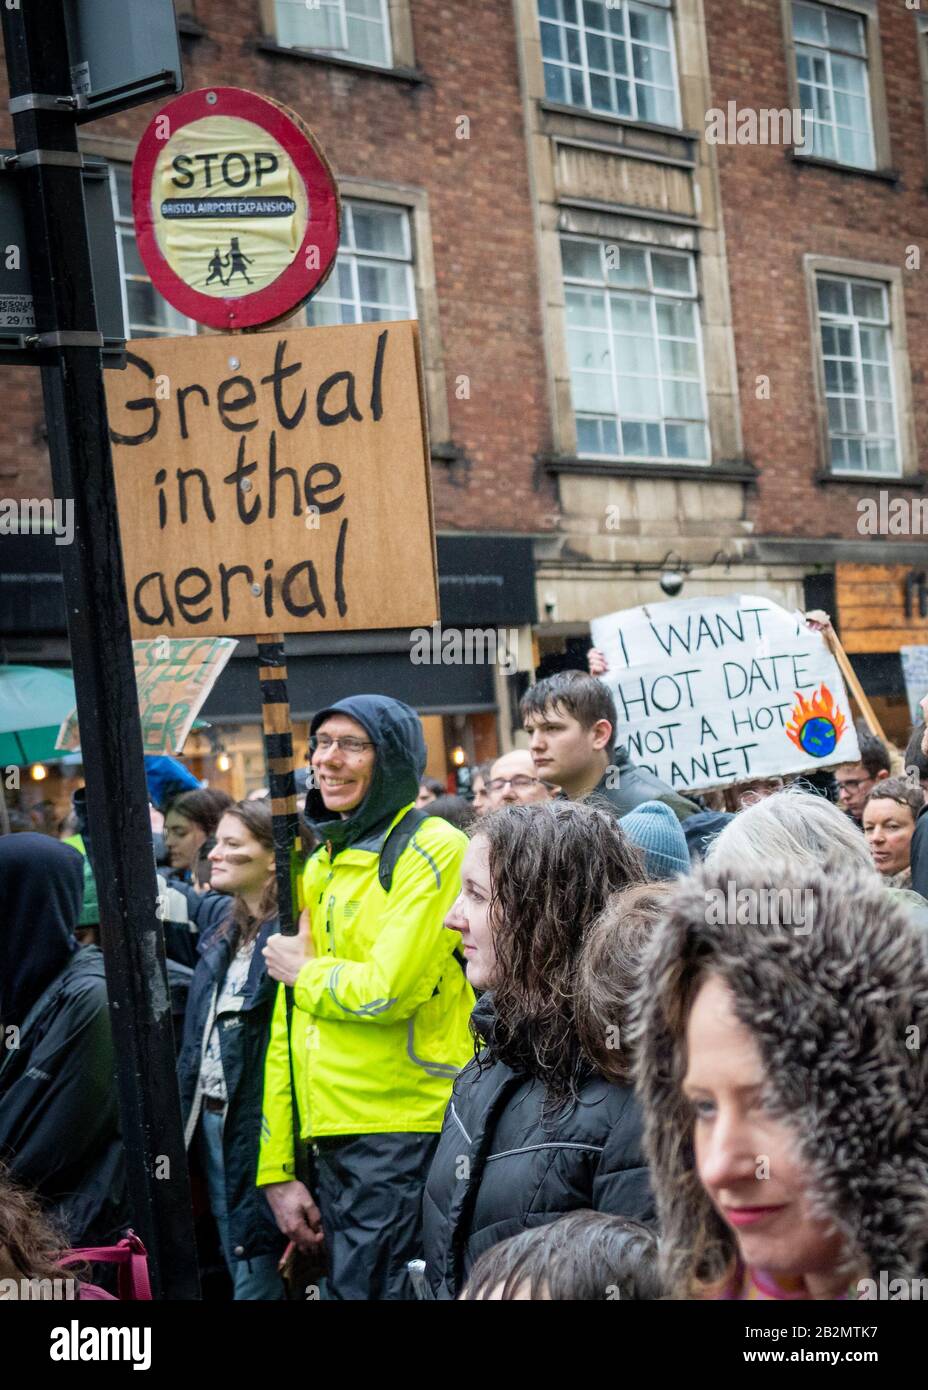 Greta in the Area in Bristol at March for Climate and School Strike Bristol UK 28. Feb. 2020, nachdem Greta Thumberg auf College Green gesprochen hatte Stockfoto